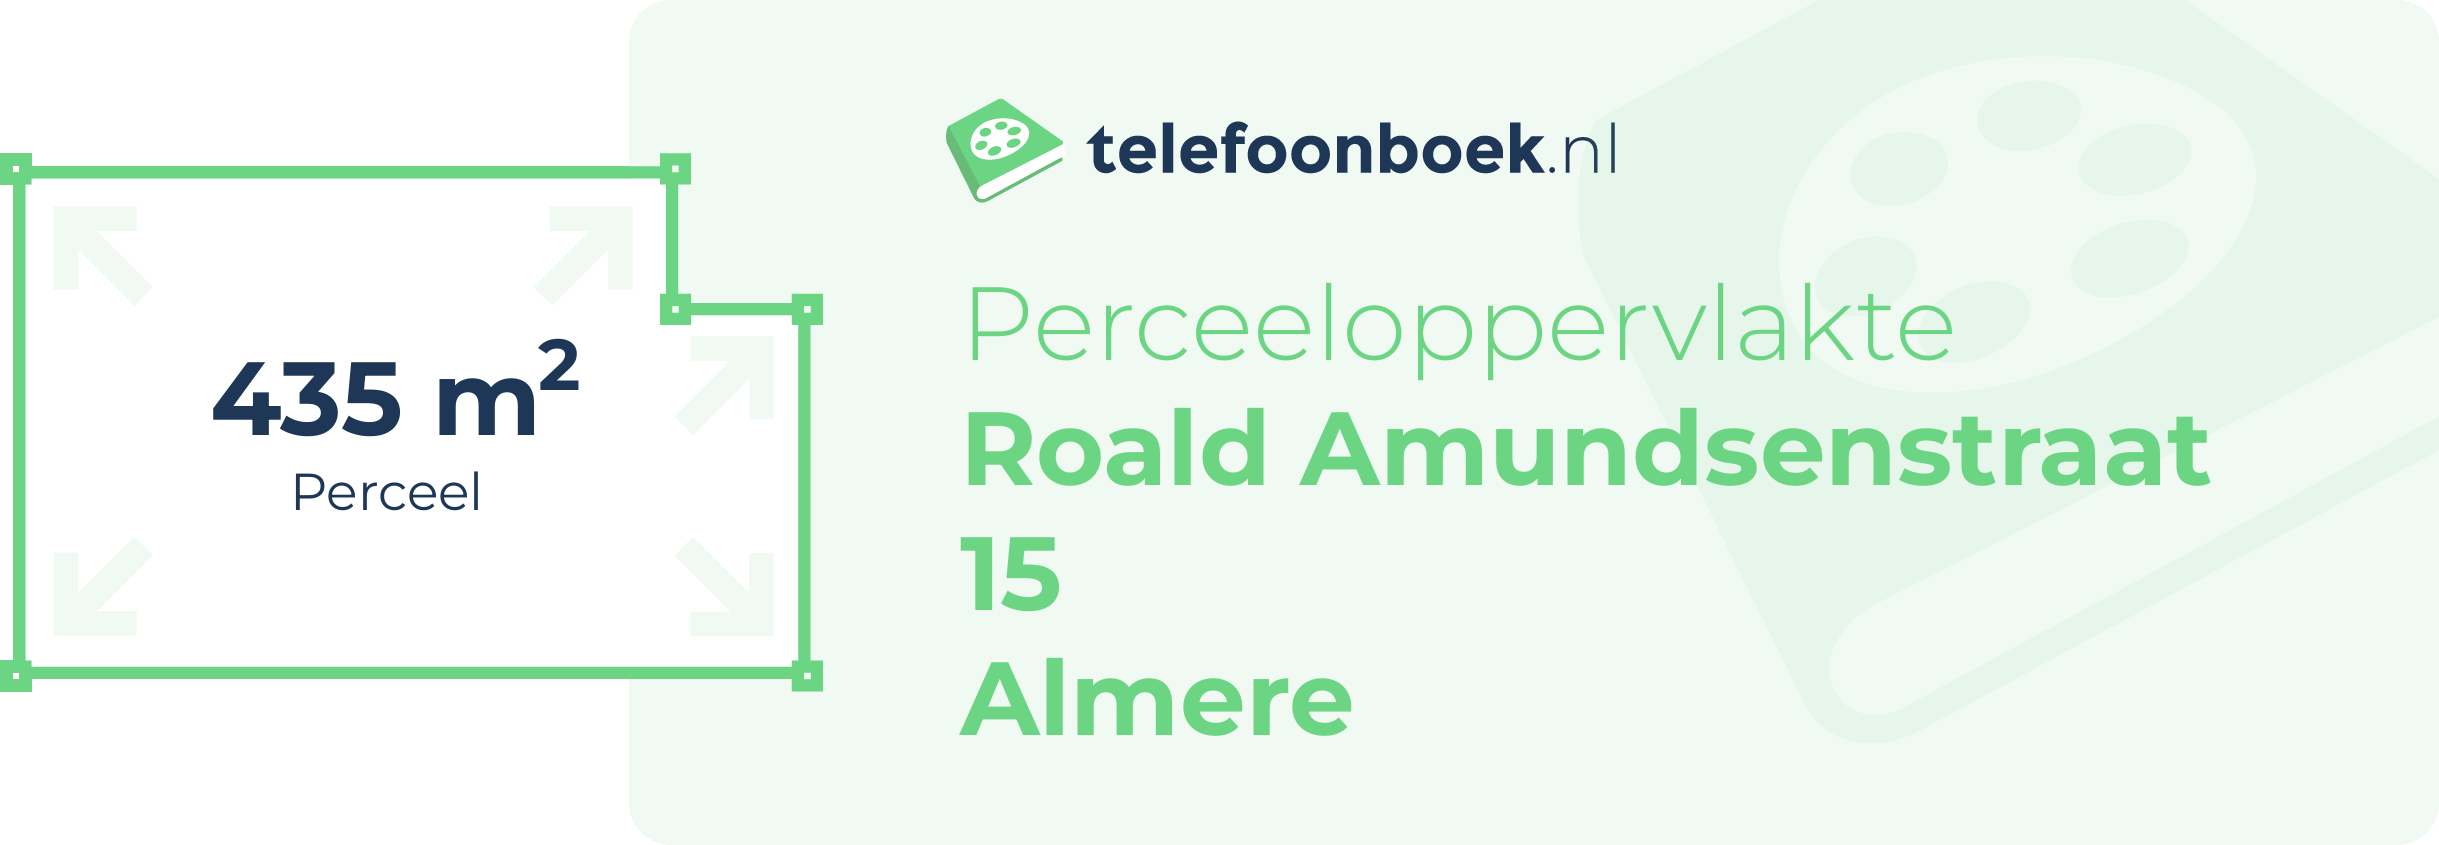 Perceeloppervlakte Roald Amundsenstraat 15 Almere